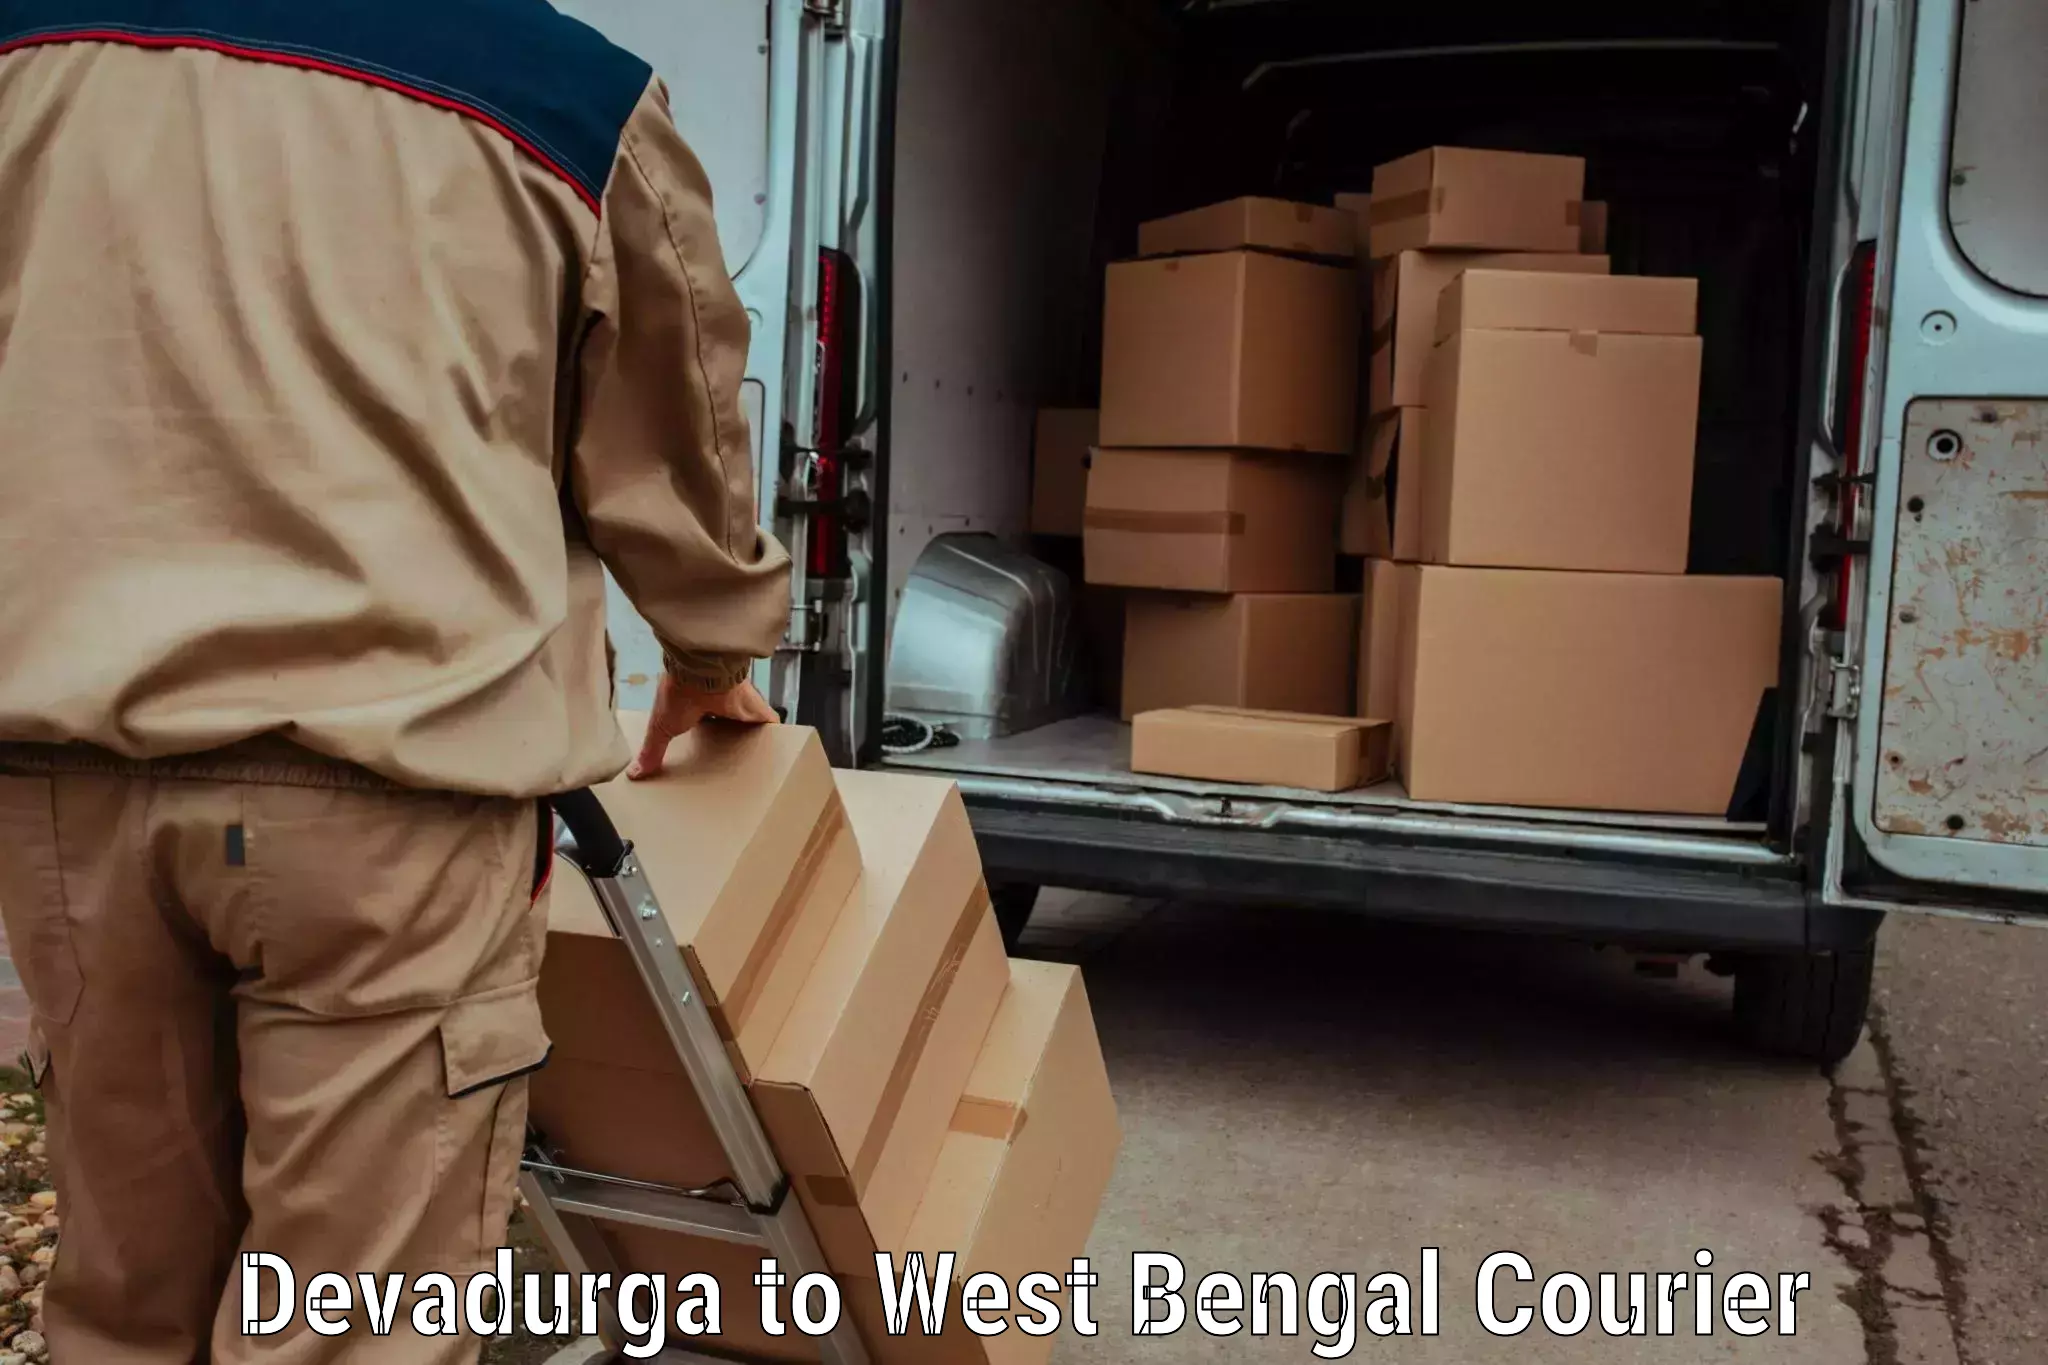 Courier service comparison in Devadurga to Nanoor